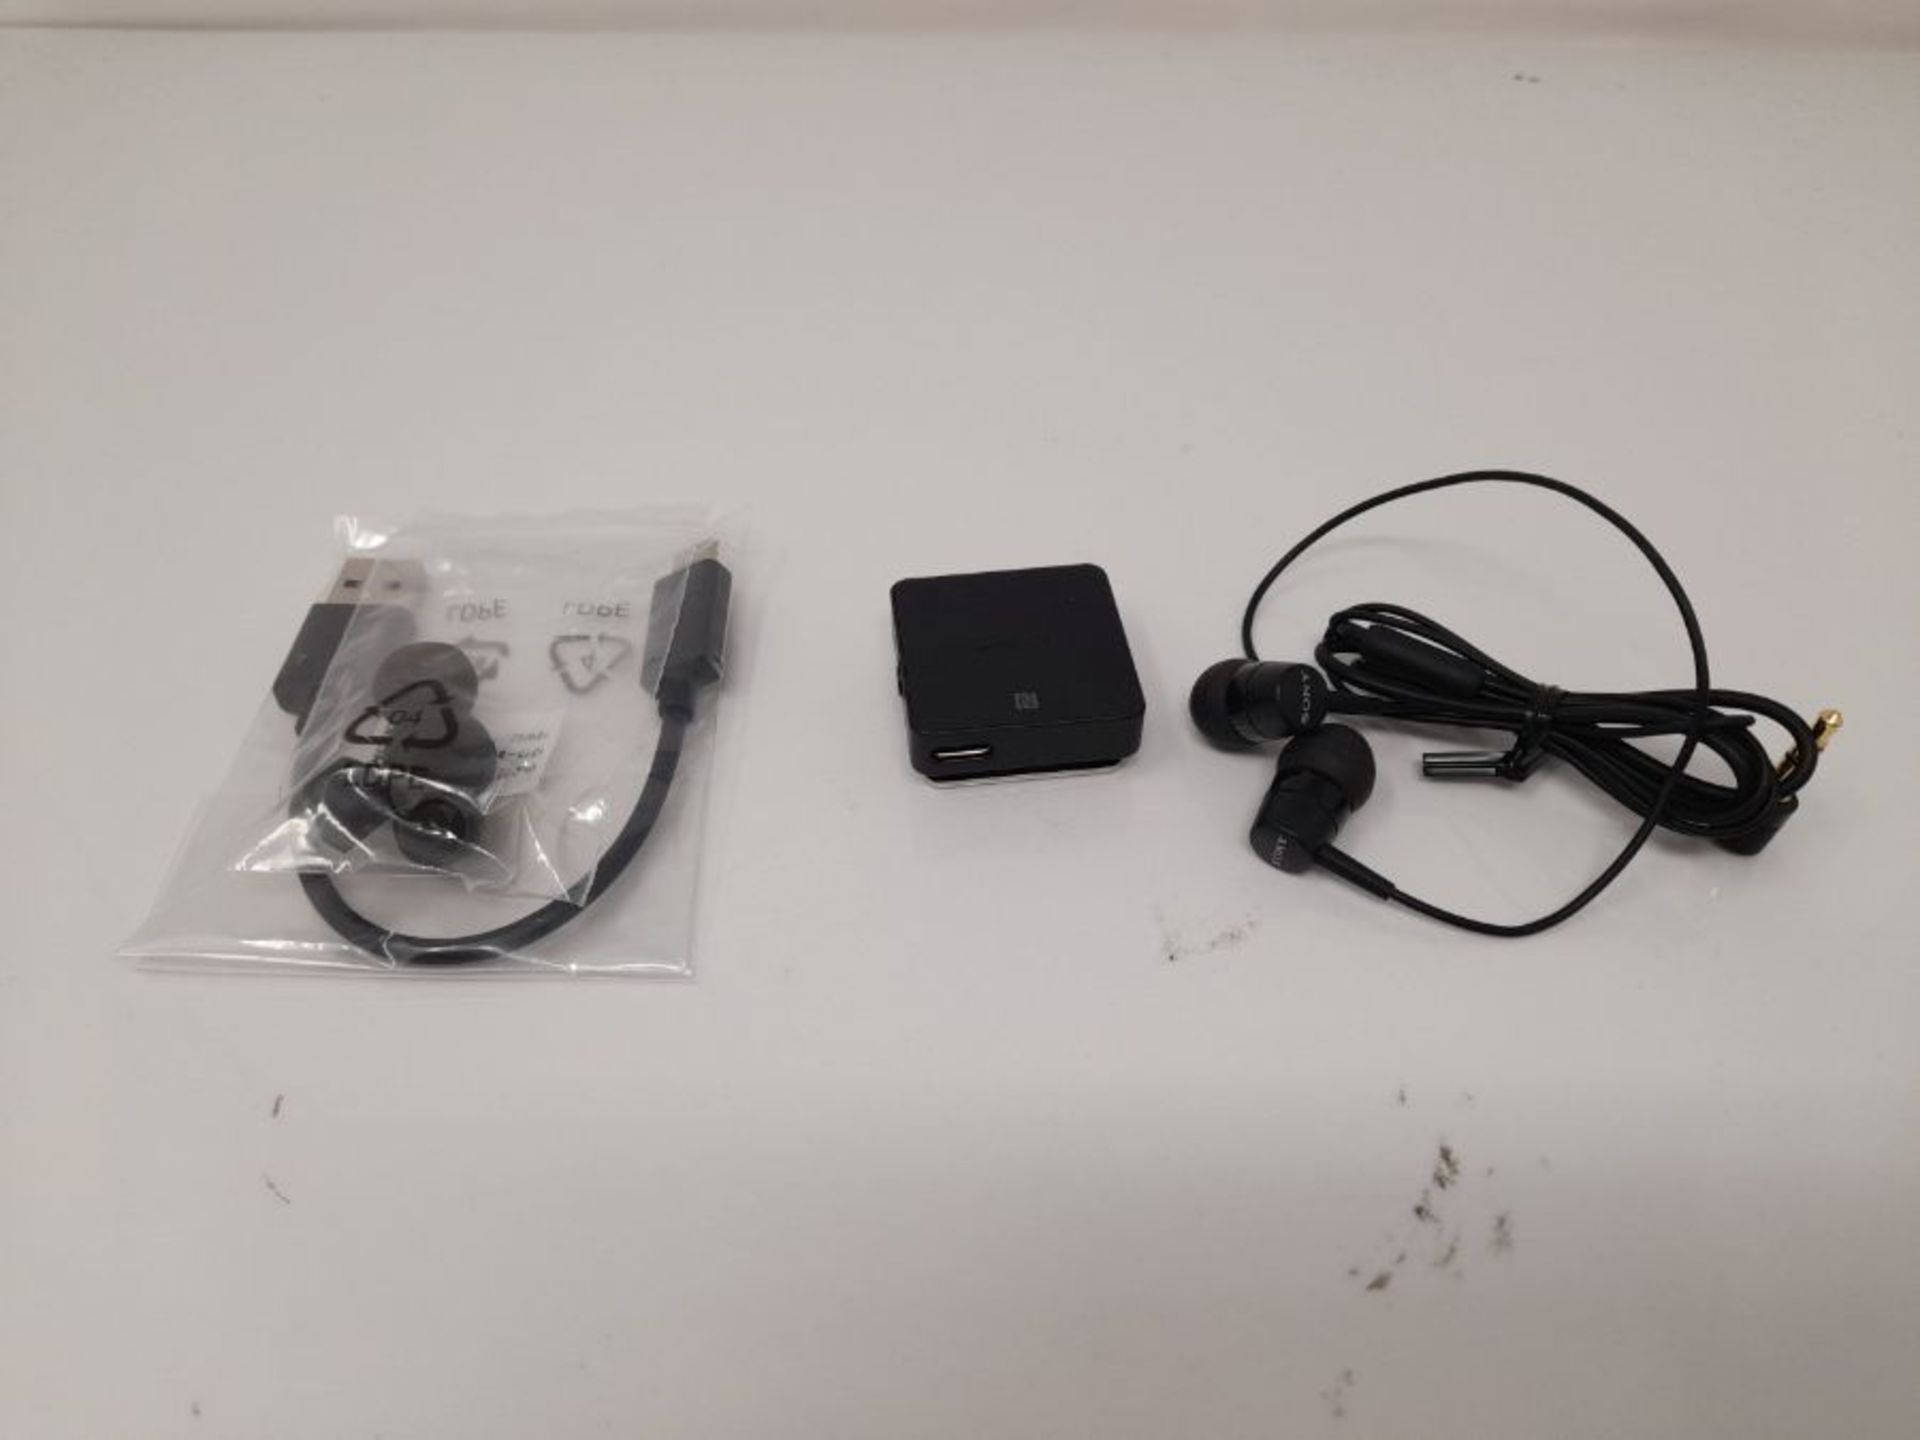 Sony SBH24 Stereo Bluetooth Headset - Black - Image 3 of 3